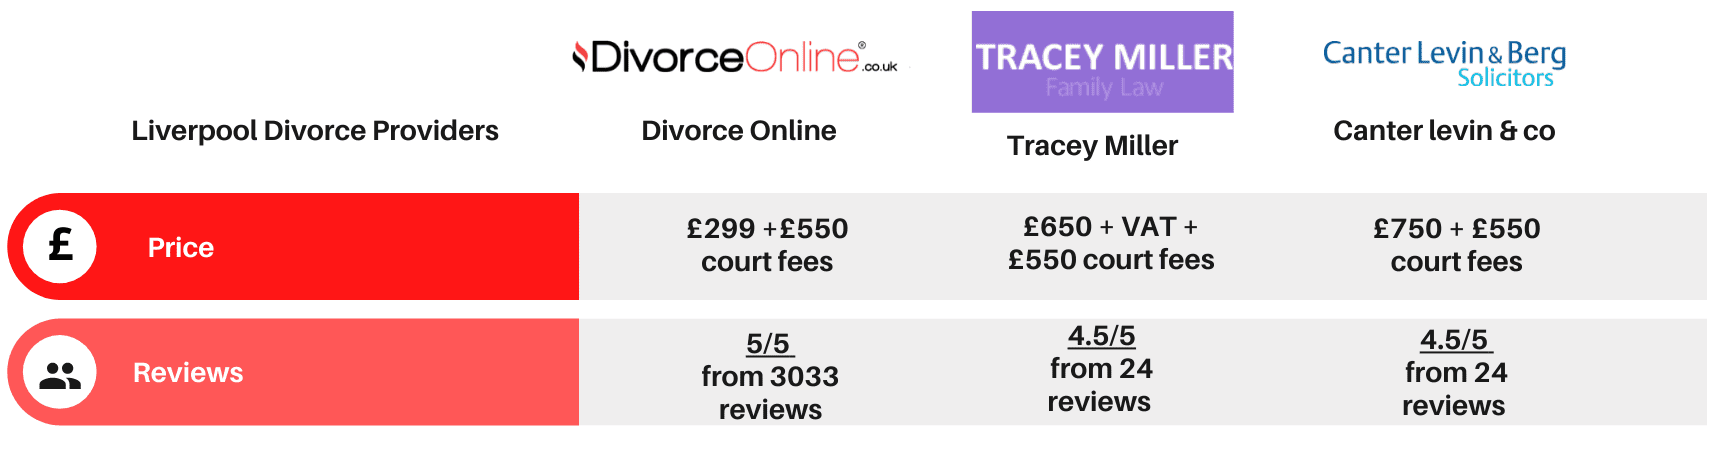 Liverpool Divorce Providers